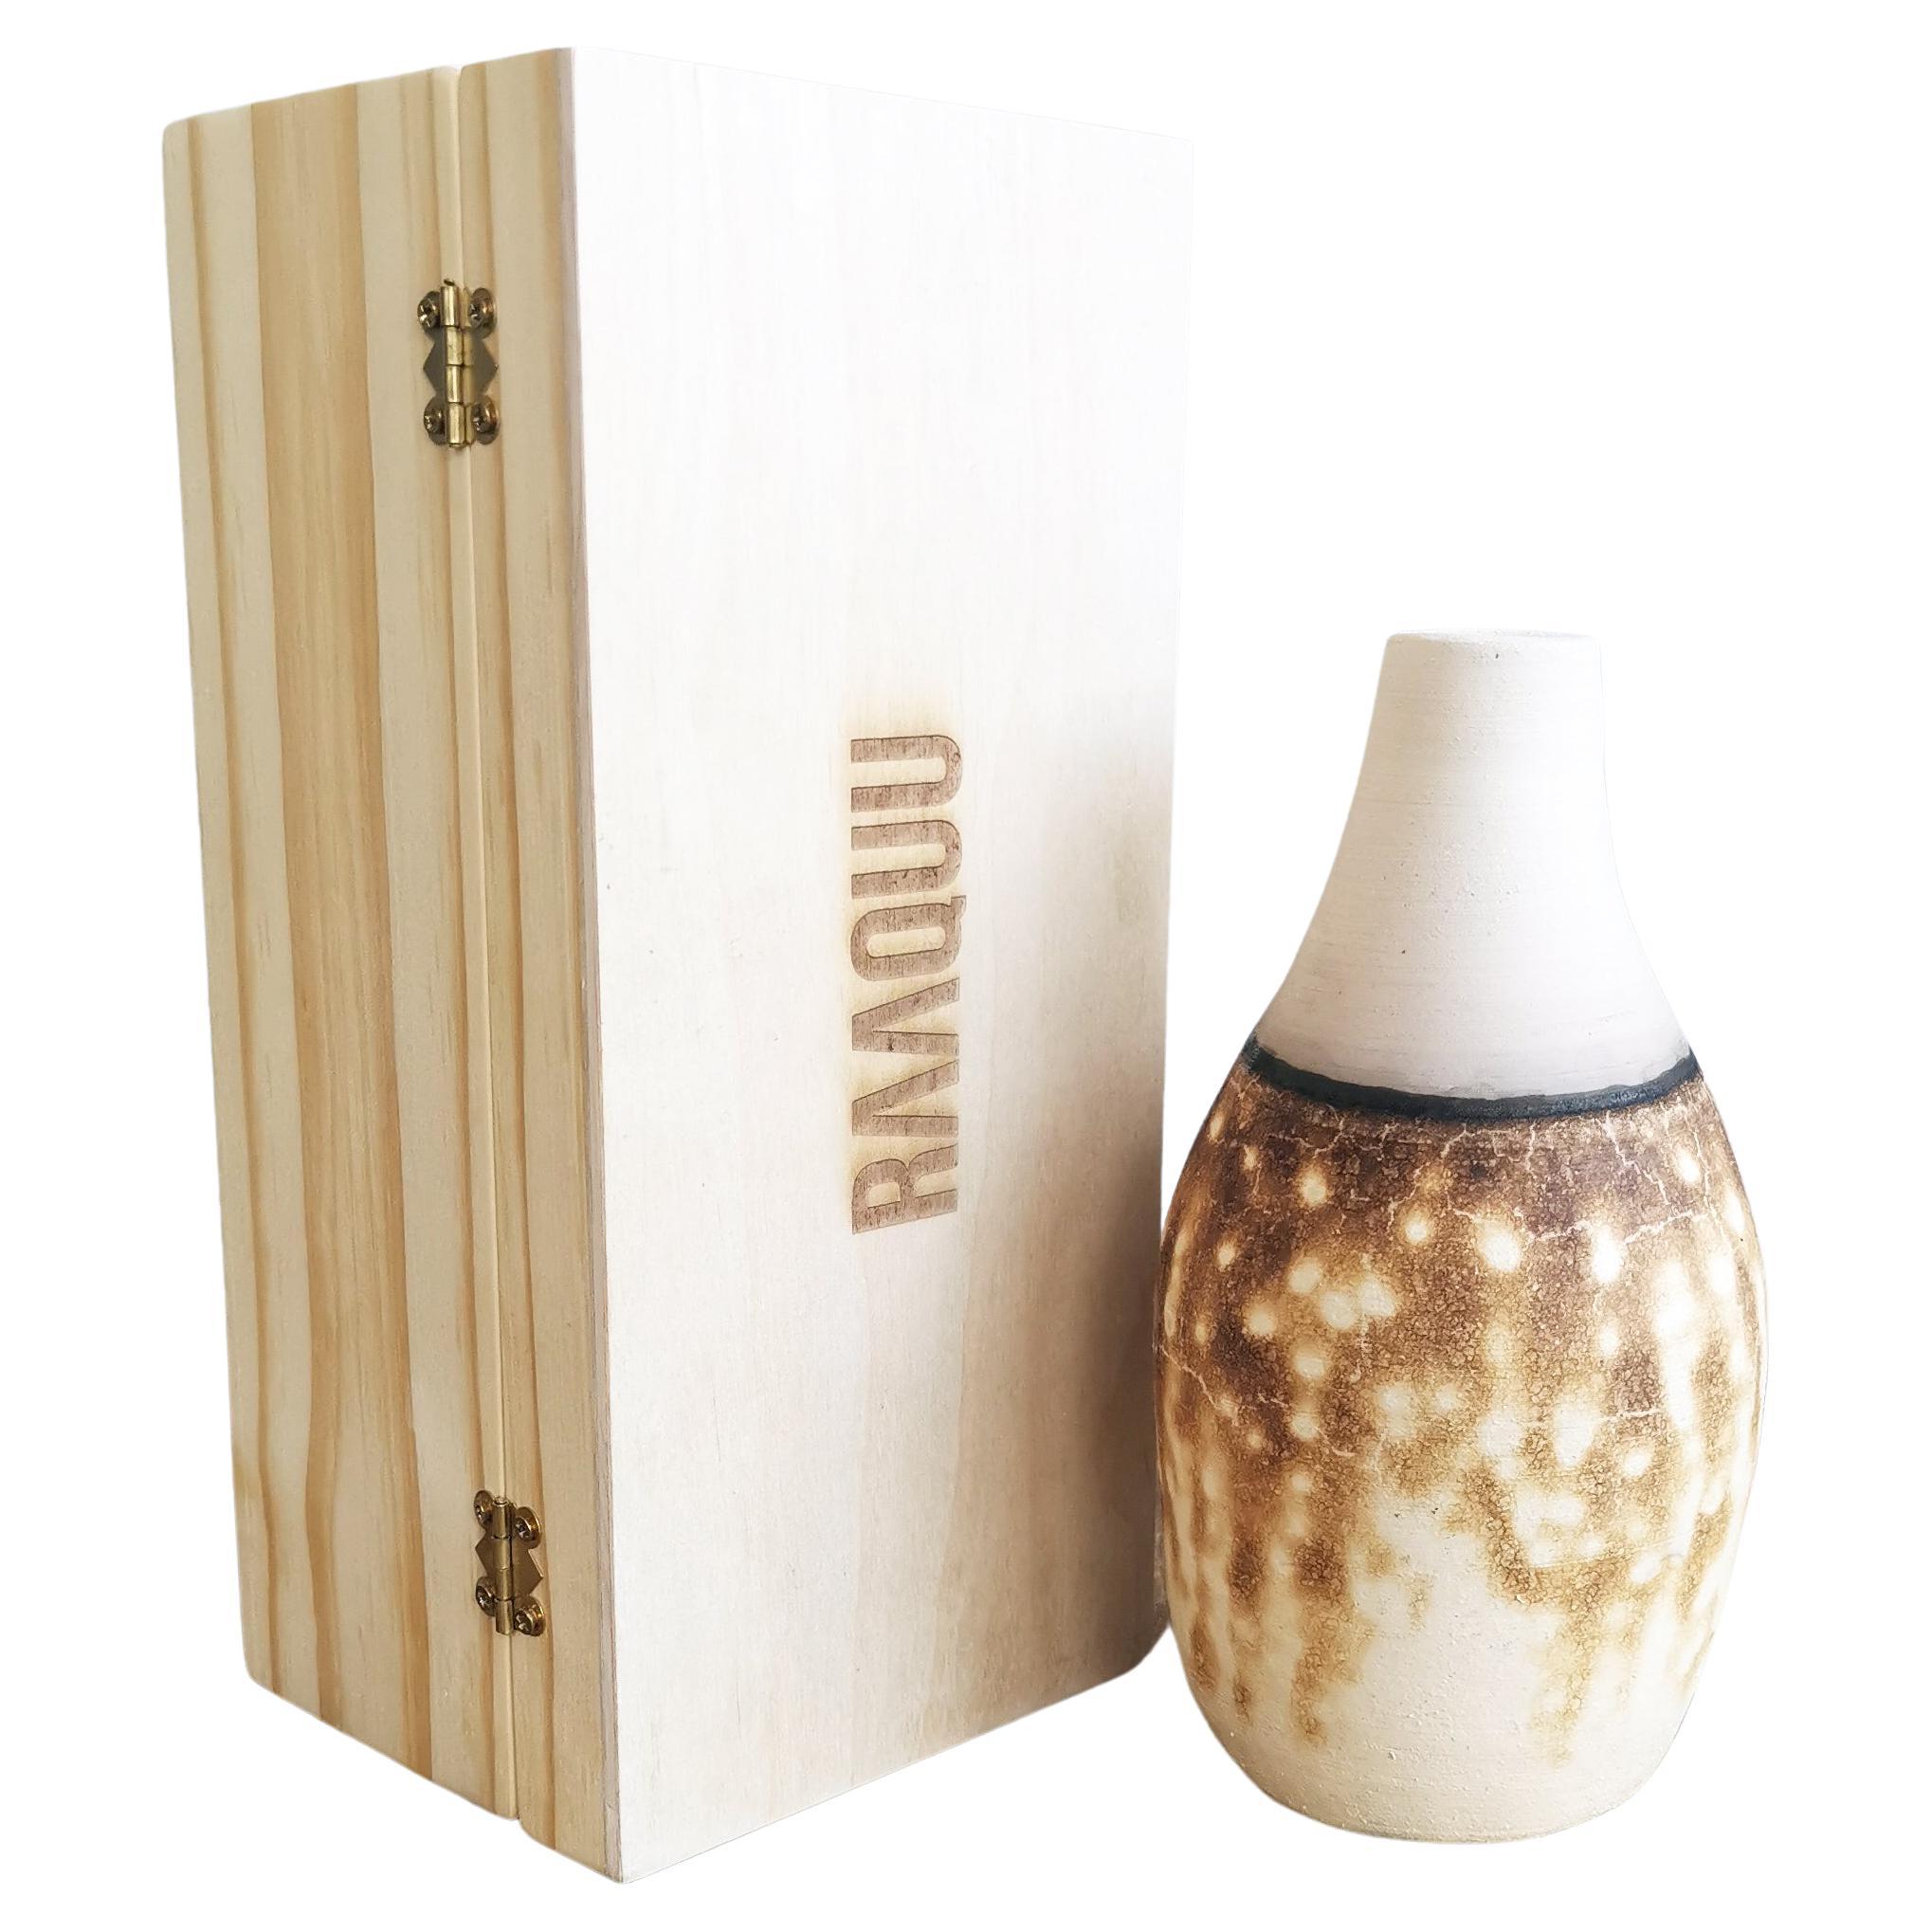 Natsu Raku-Keramik-Vase mit Geschenkbox - Obvara - Handgemachte Keramik